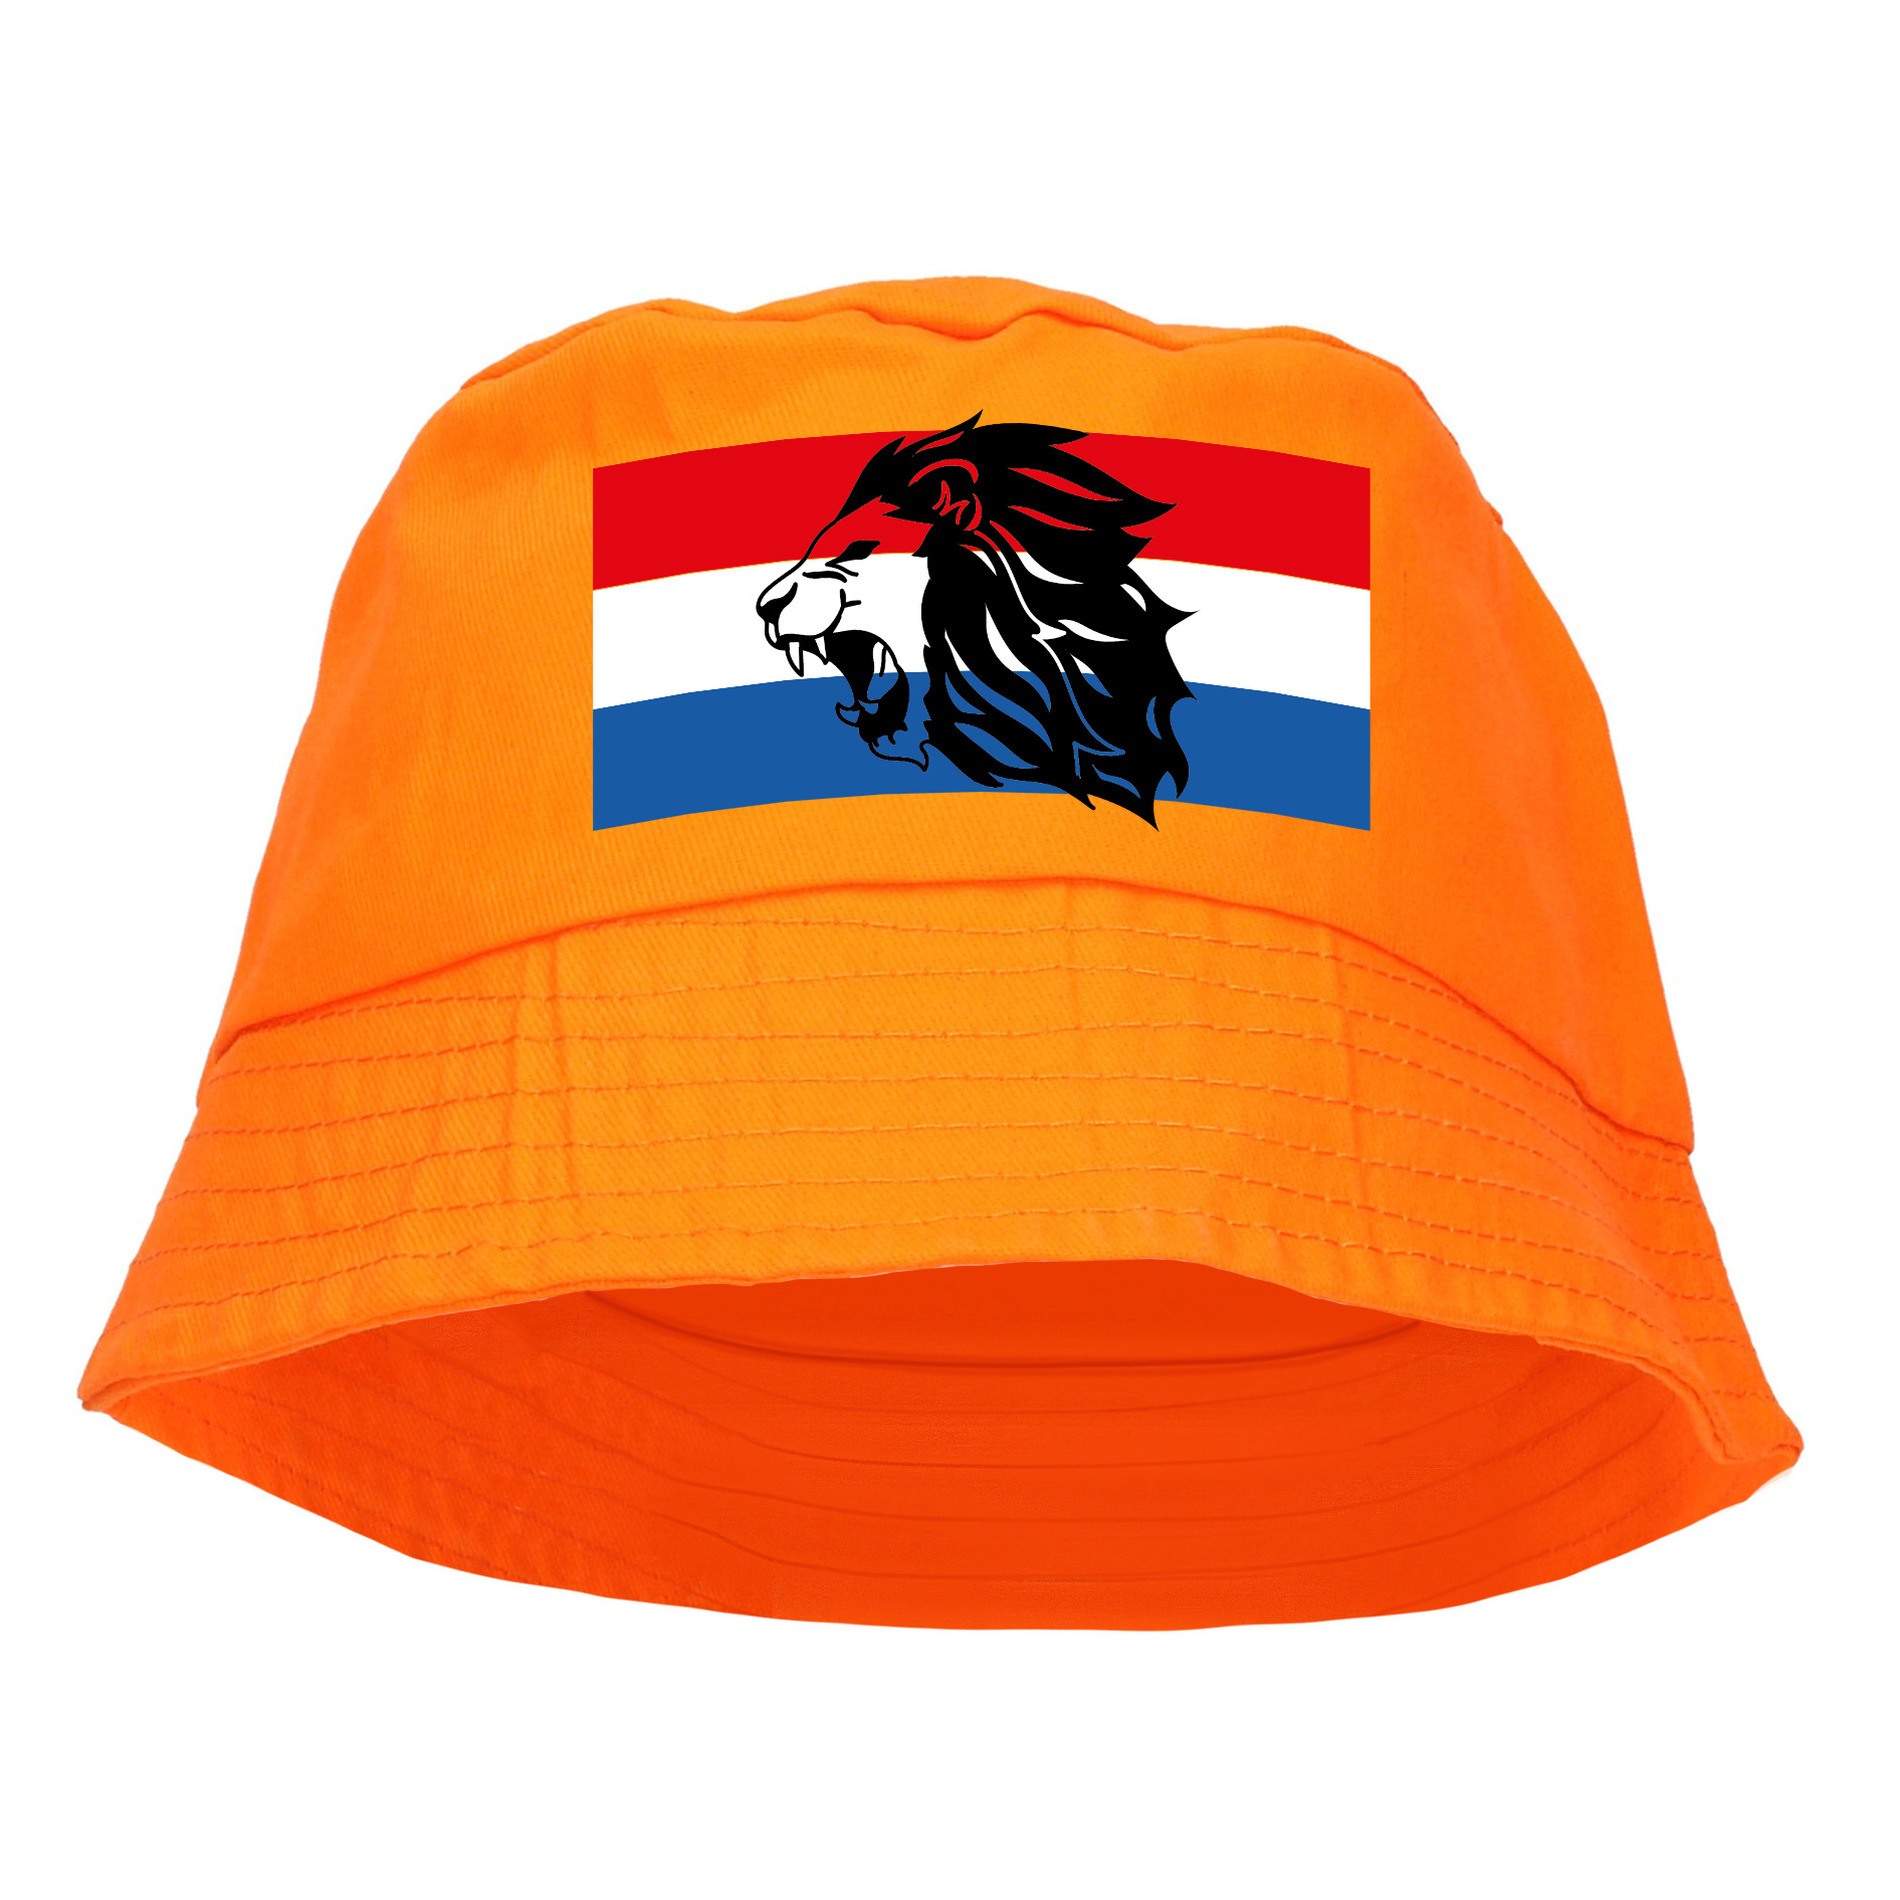 Oranje supporter - Koningsdag vissershoedje met Nederlandse vlag en leeuw voor EK/ WK fans